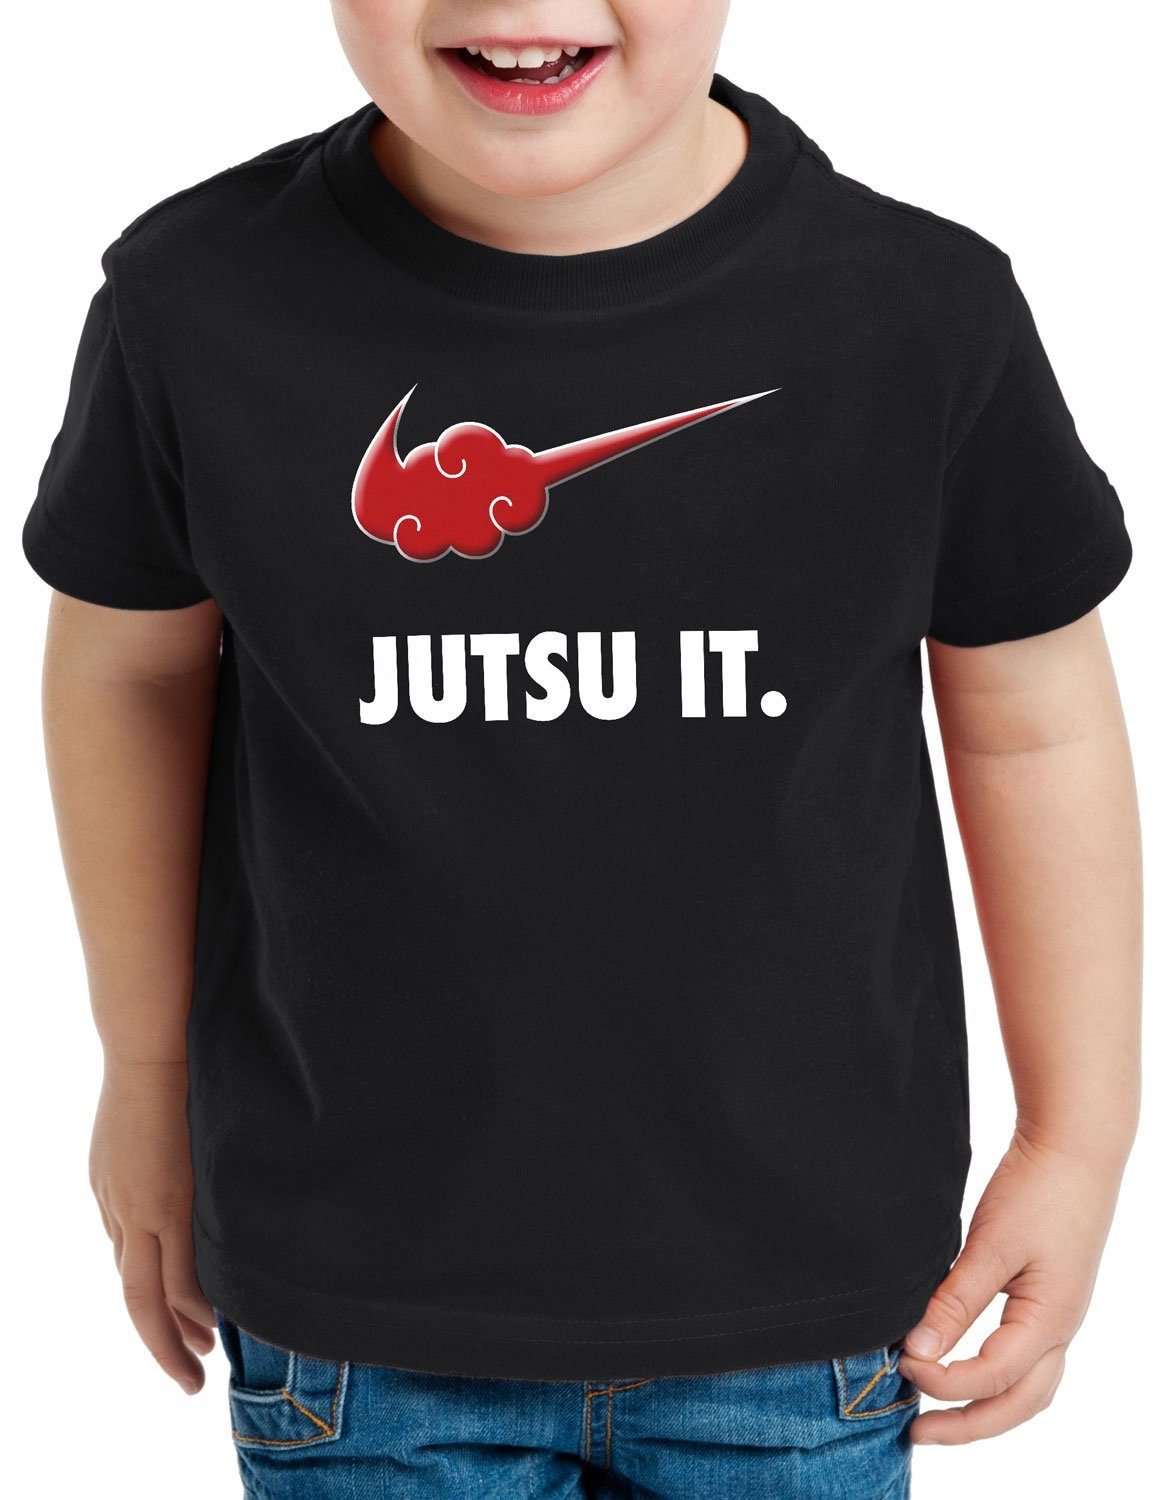 T-Shirt it Jutsu style3 manga japan schwarz Print-Shirt anime ninja Kinder fuchs